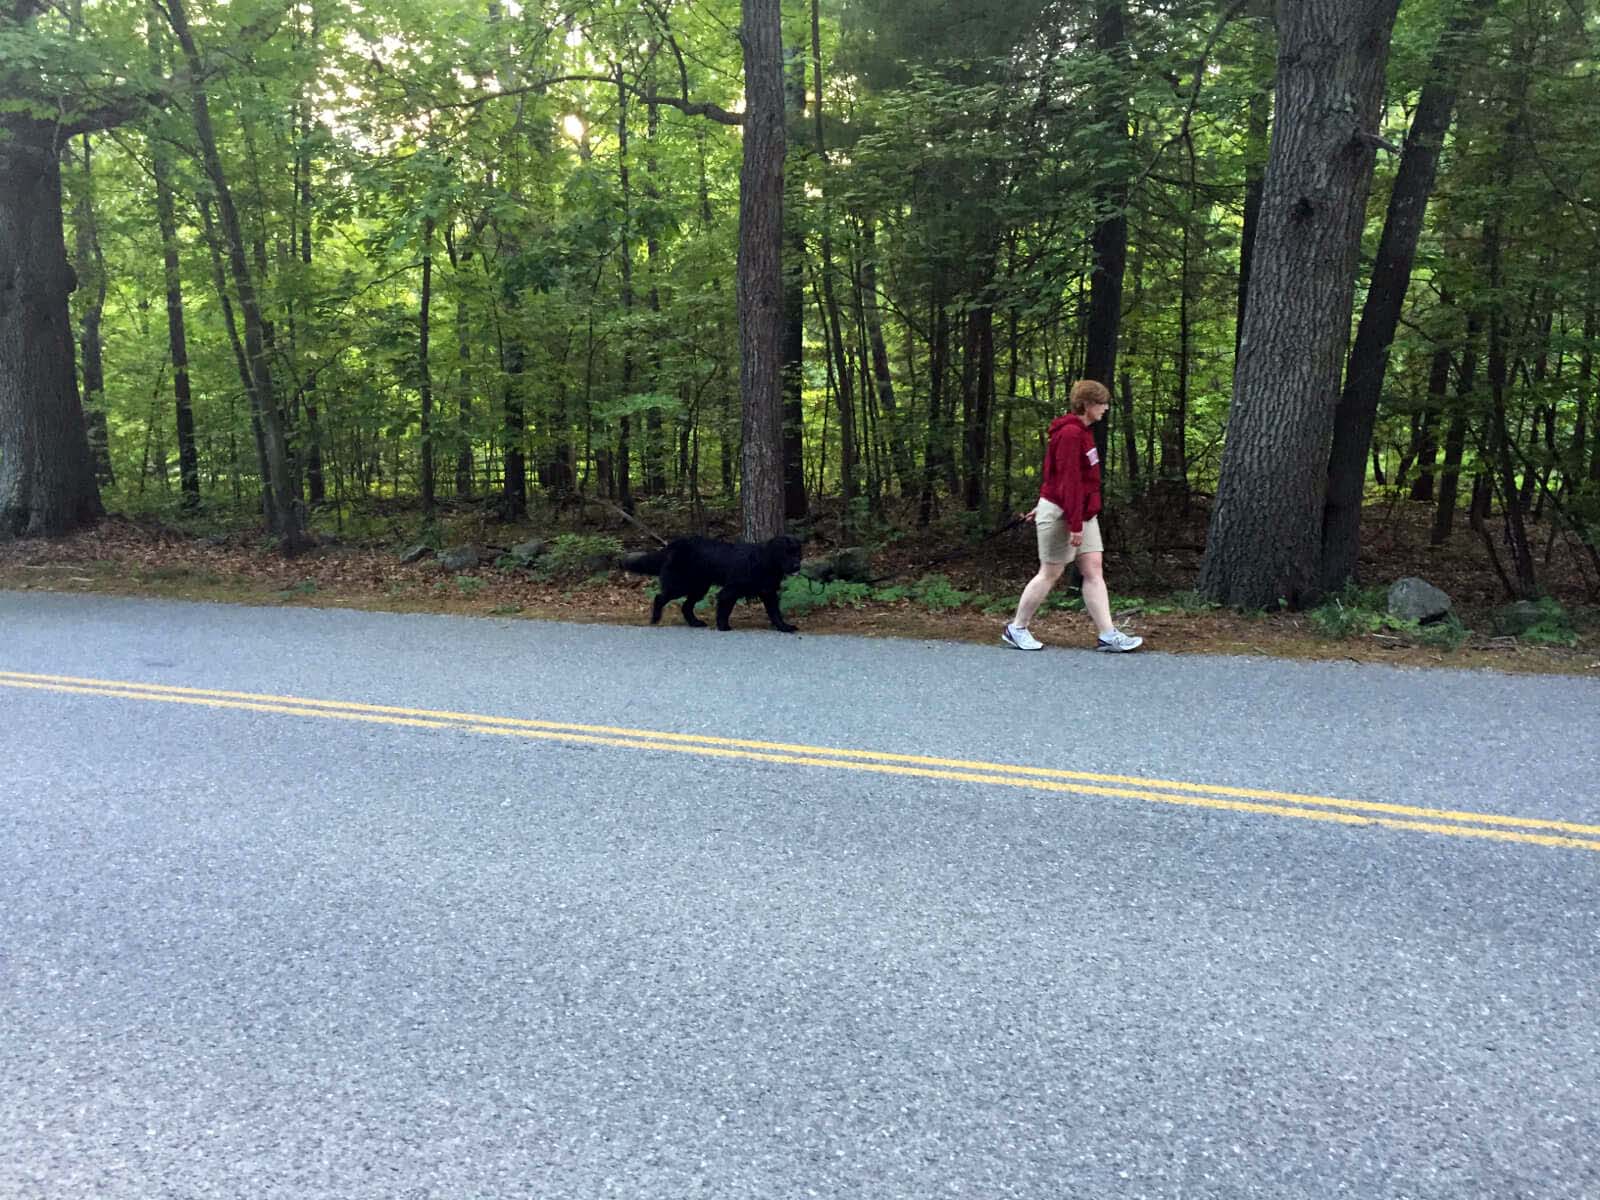 Large black dog following woman